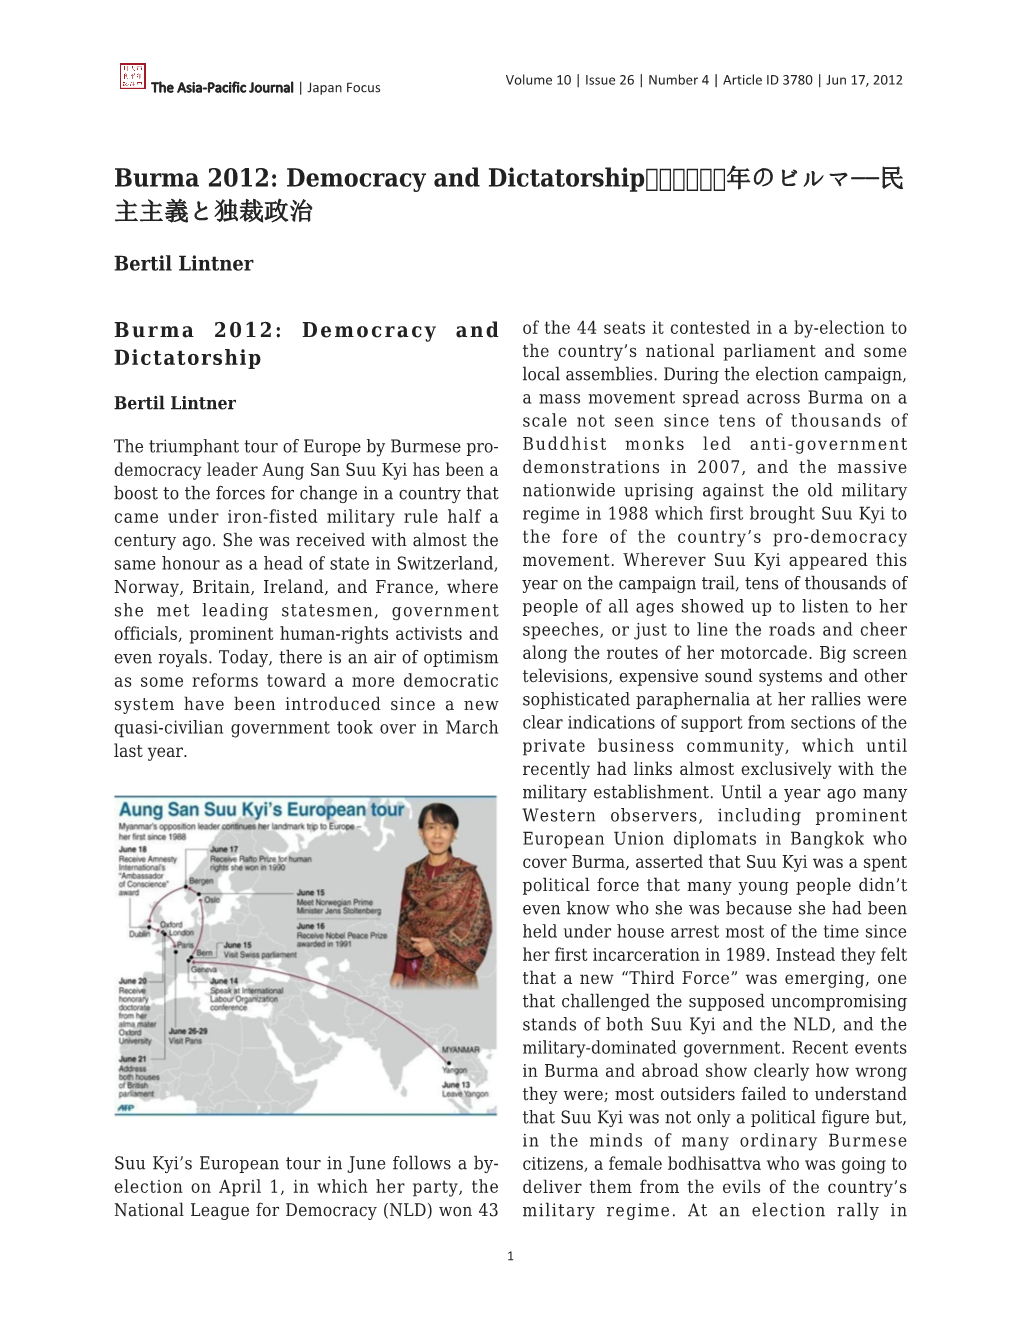 Democracy and Dictatorship 2012年のビルマ−−民 主主義と独裁政治